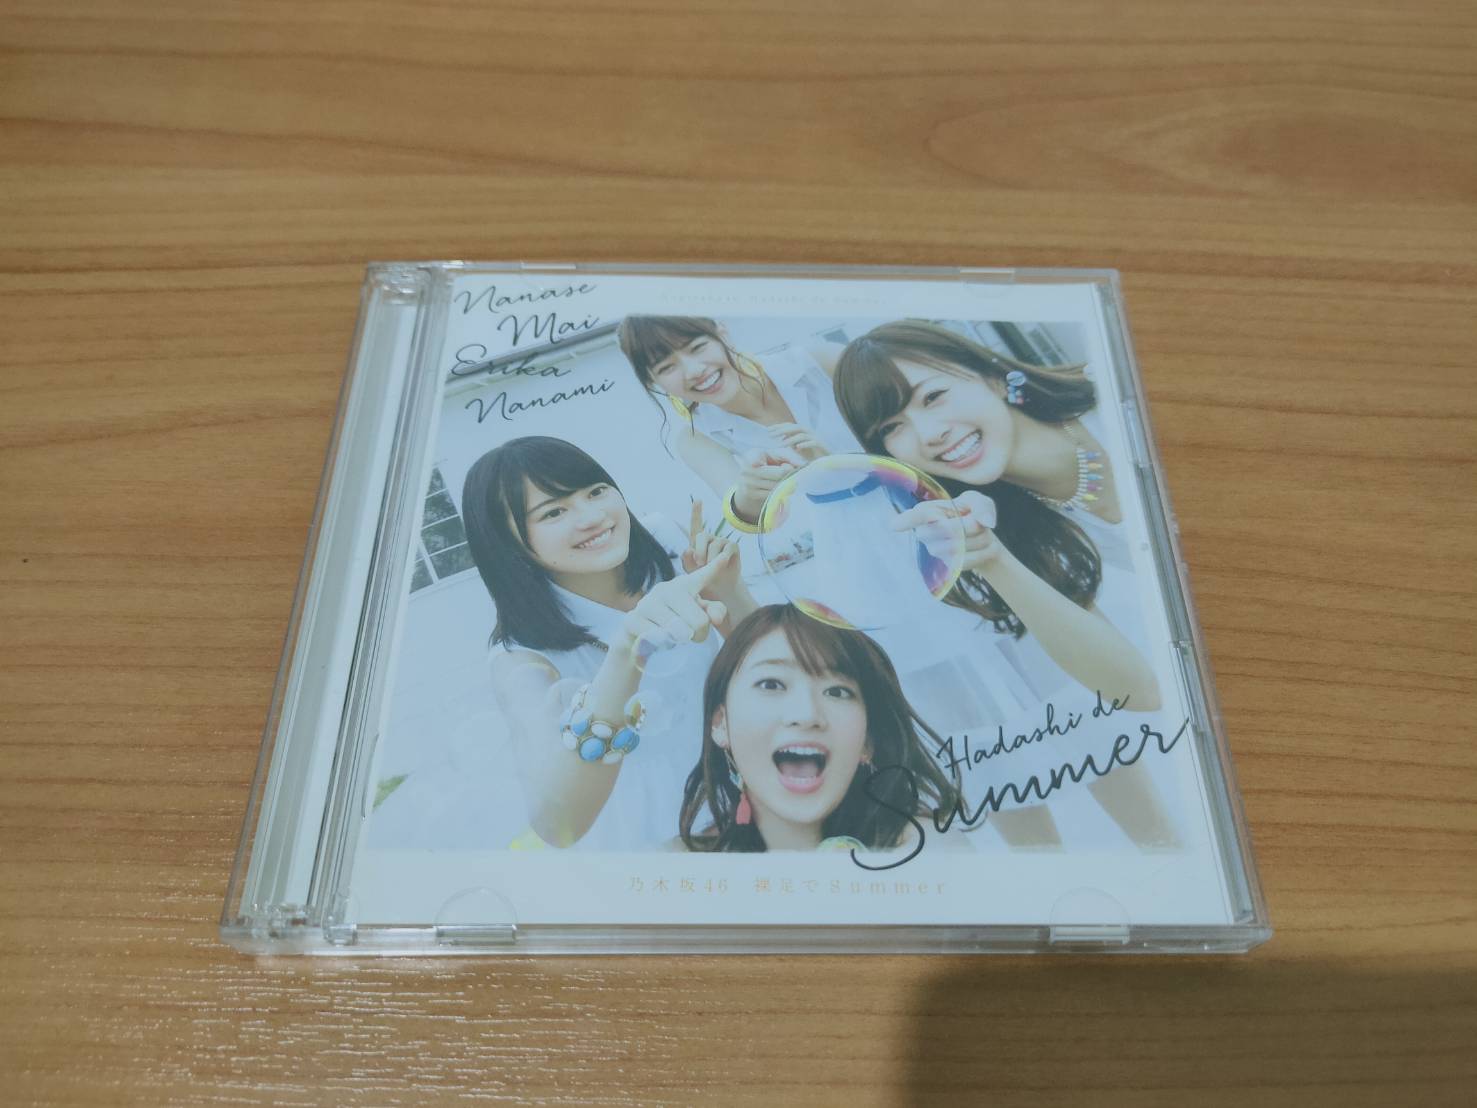 CD+DVD  MUSIC ซีดีเพลง เพลงสากล  Nogizaka46 Hadashi de Summer   (โปรดดูภาพสินค้าอย่างละเอียดก่อนทำการสั่งซื้อ)